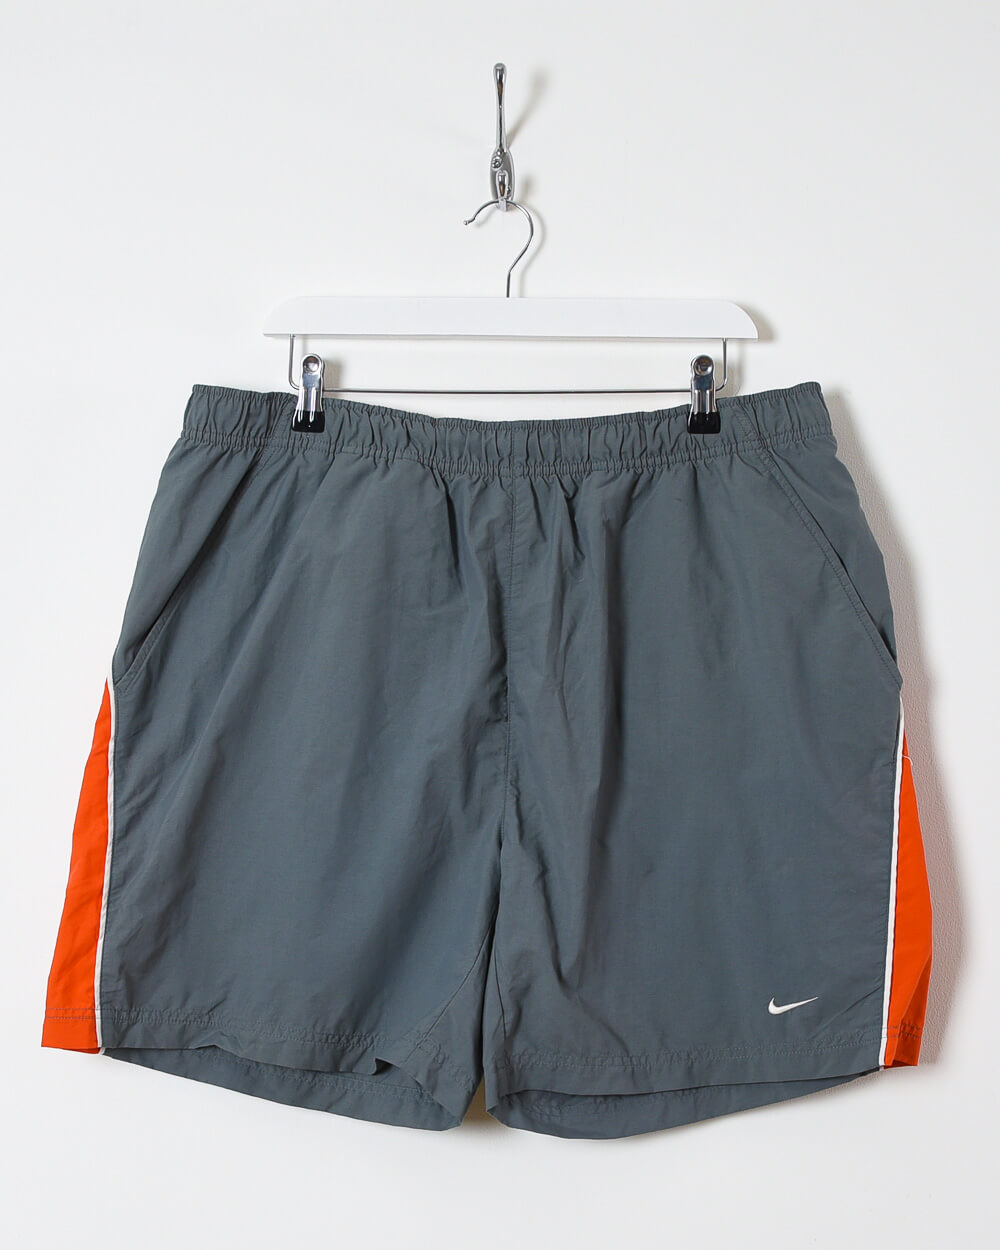 Nike Swimwear Shorts - W36 - Domno Vintage 90s, 80s, 00s Retro and Vintage Clothing 